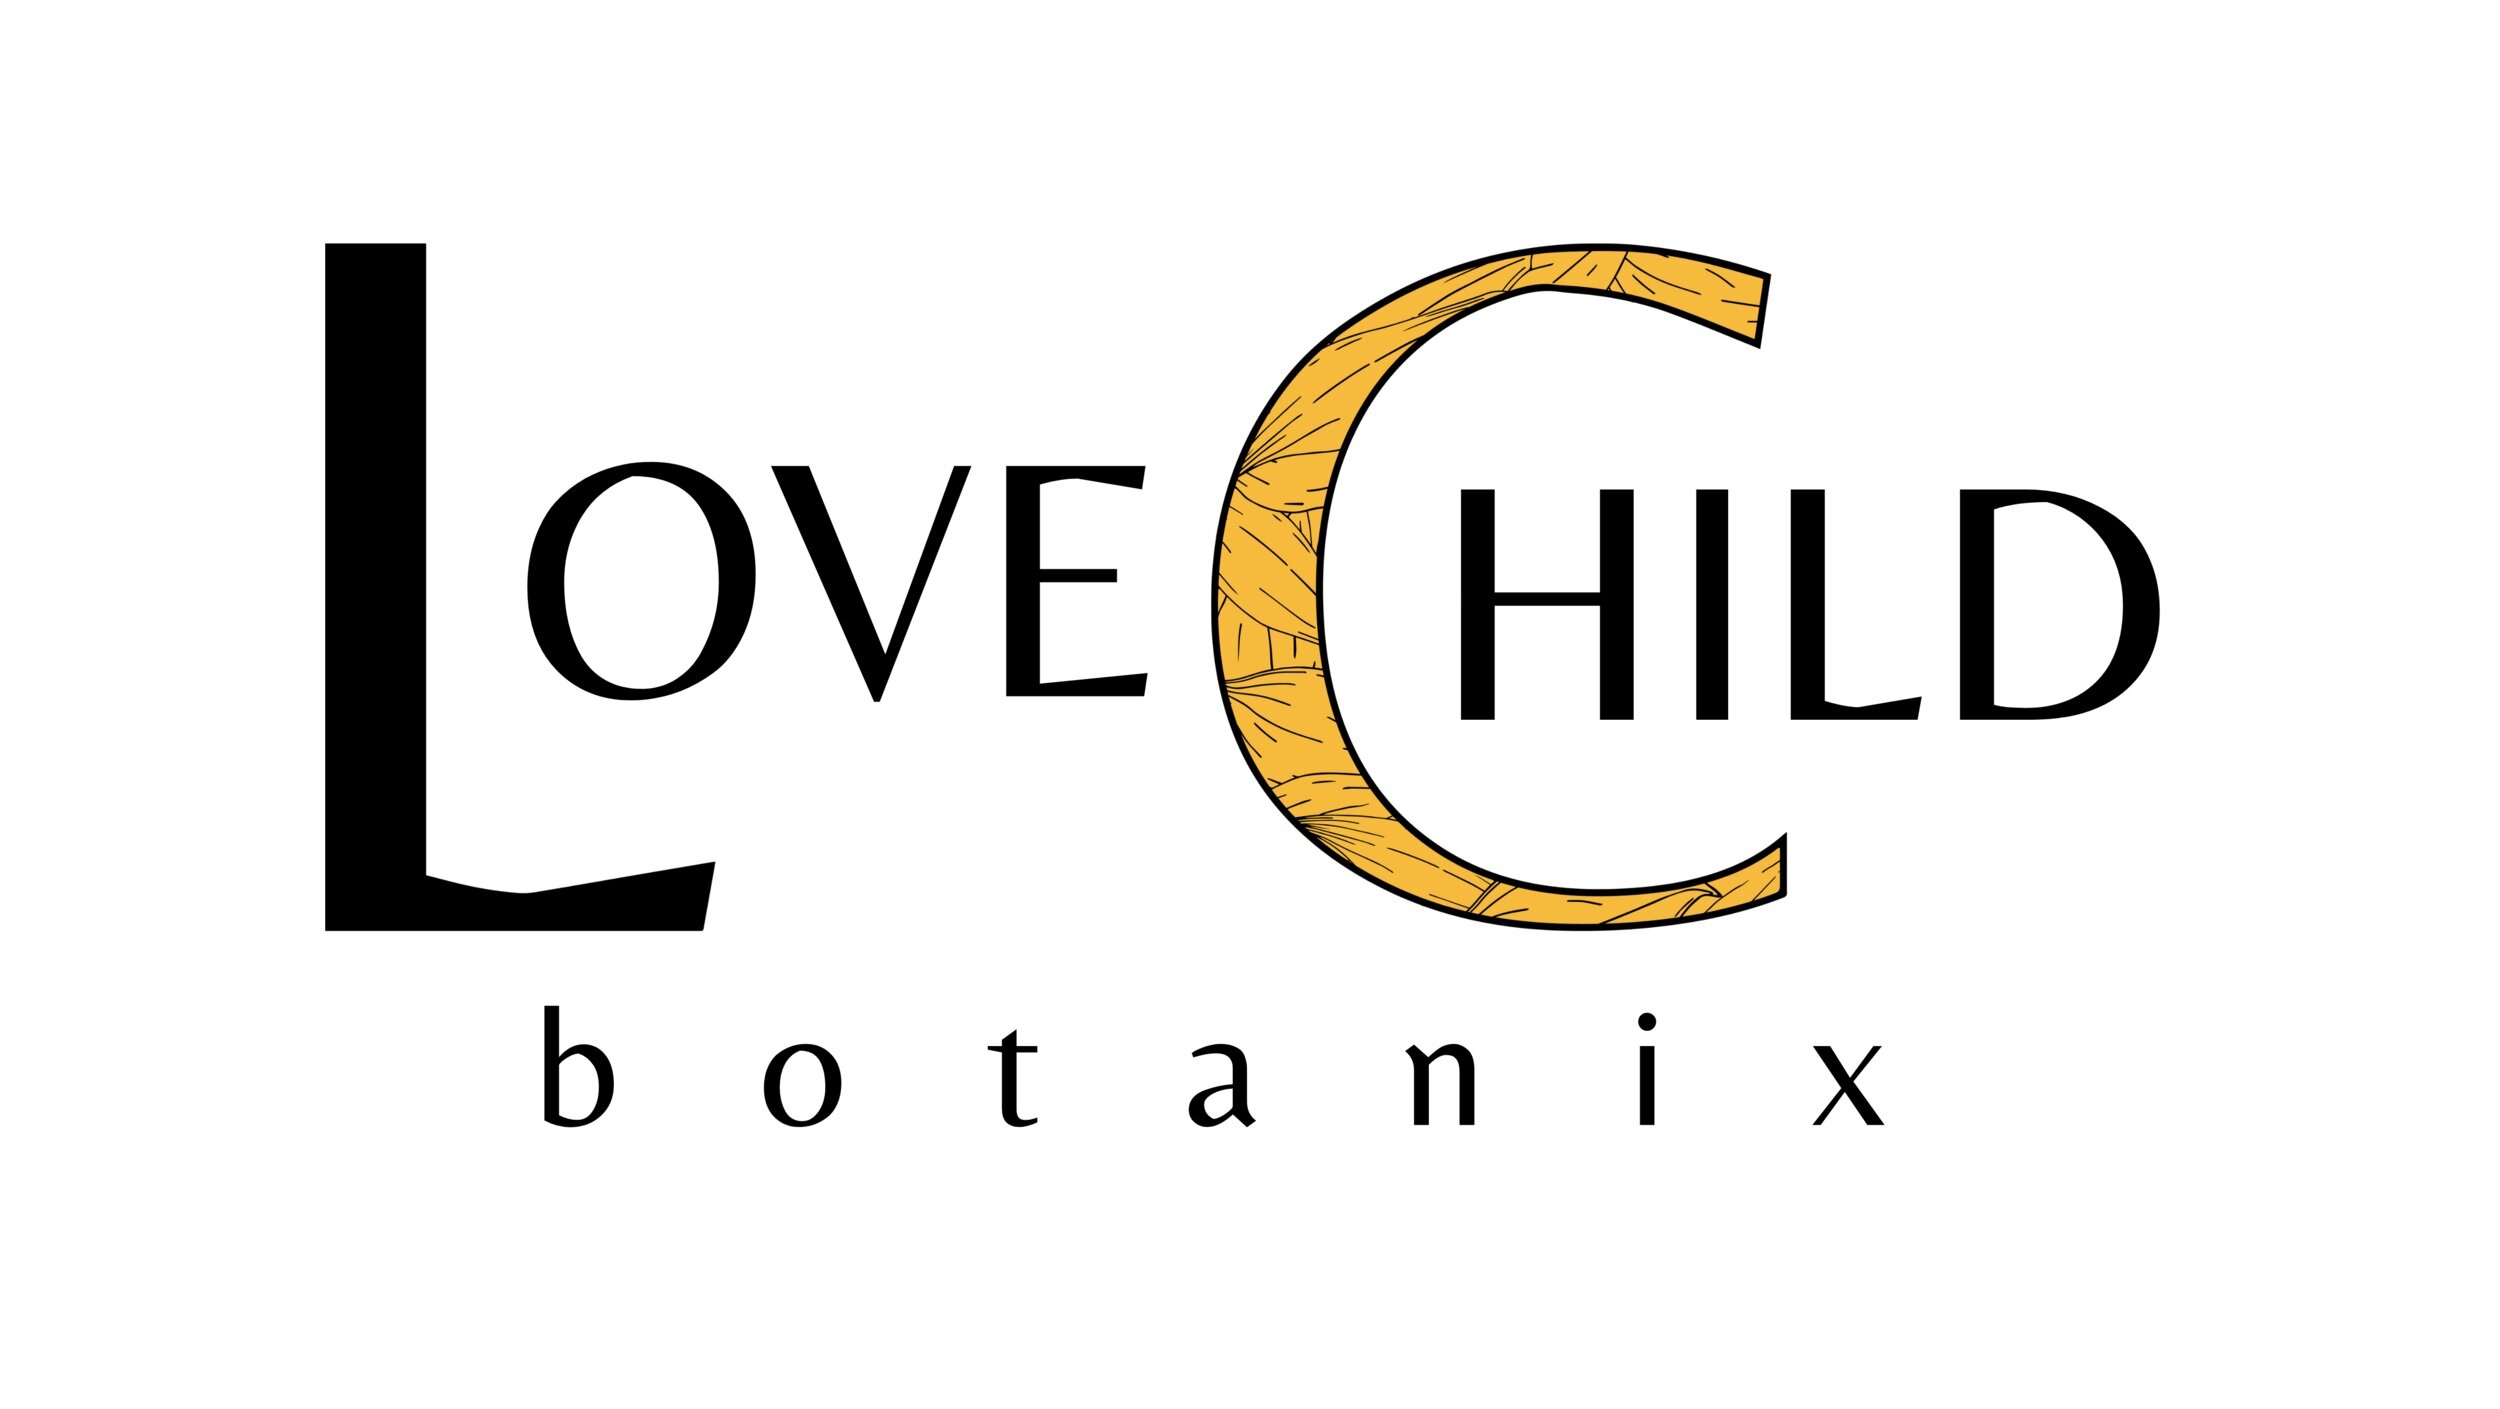 Love Child Botanix